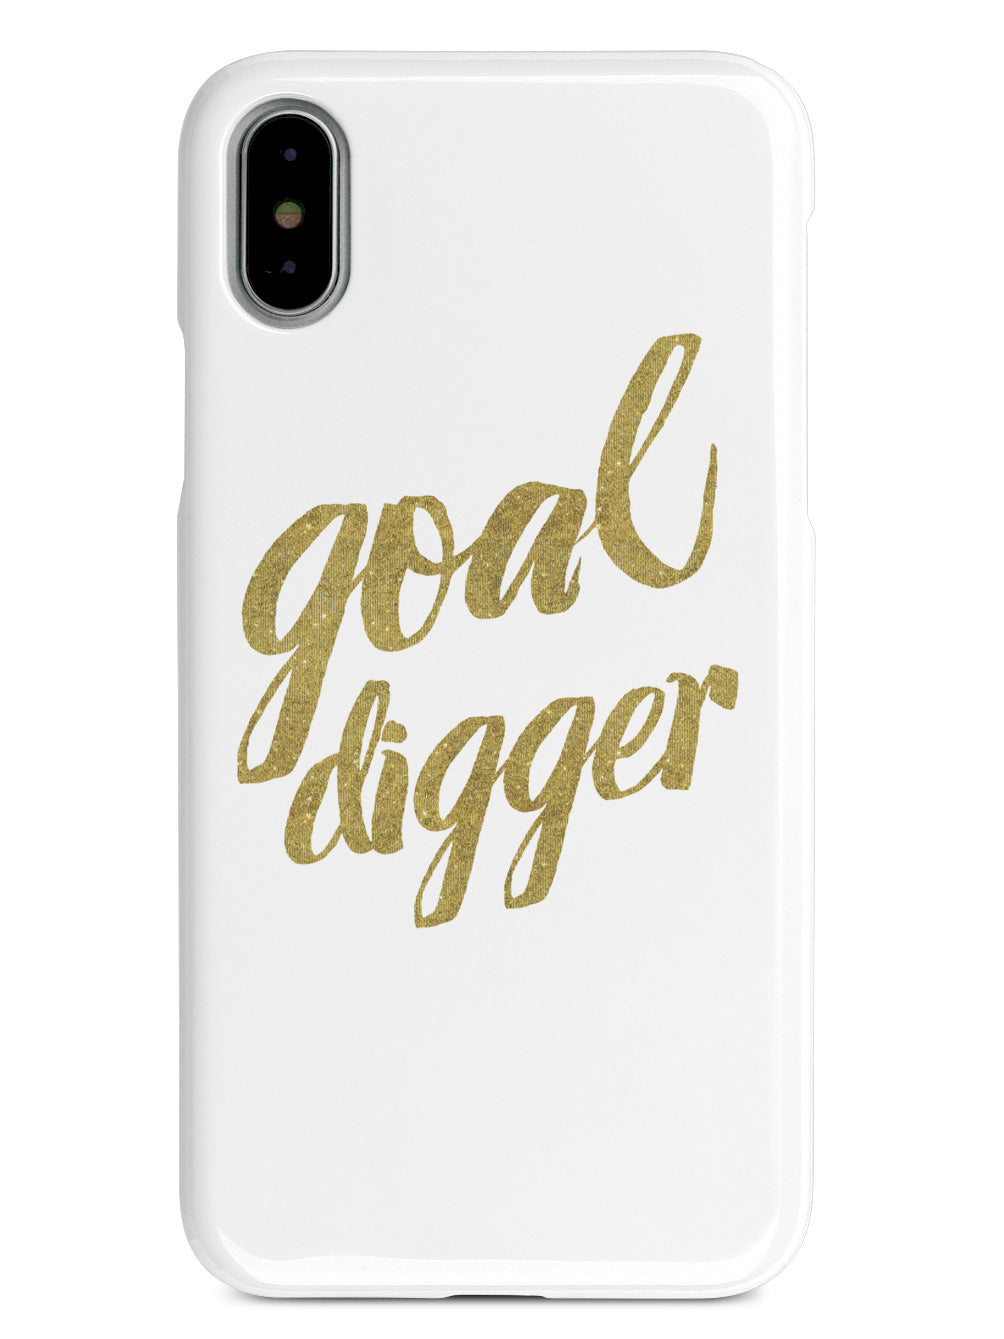 Goal Digger Case